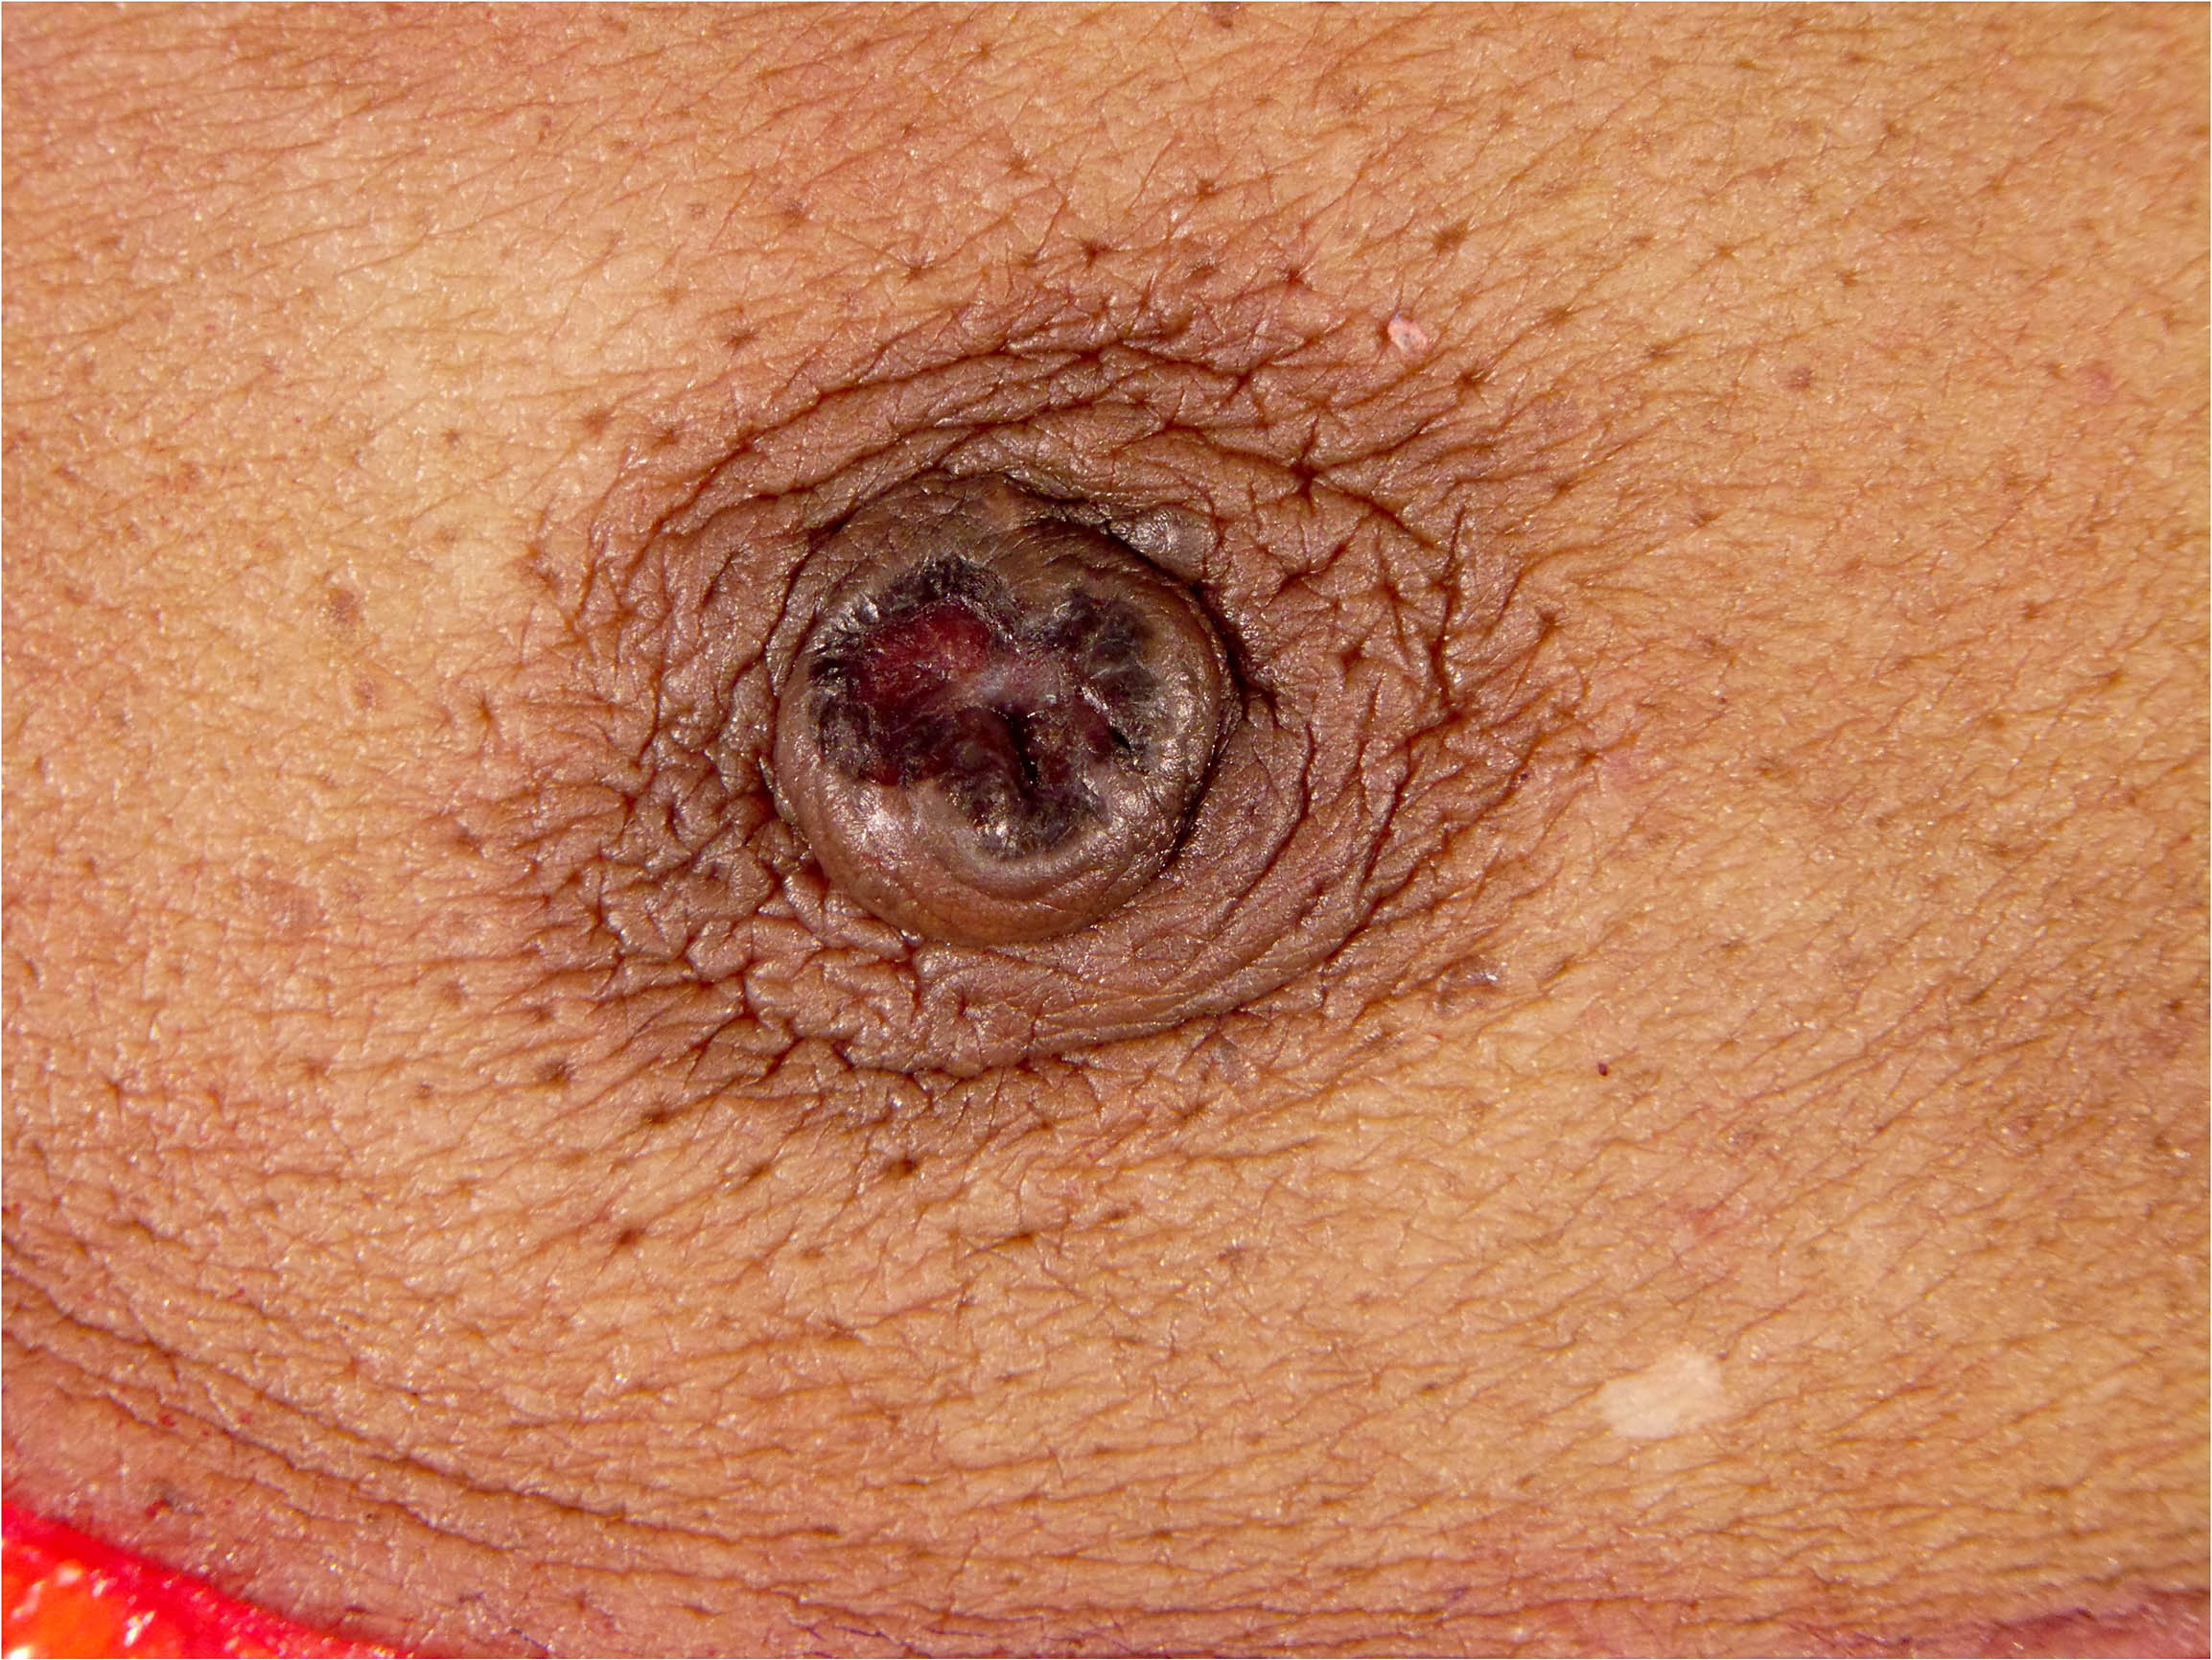 Nipple ulceration, enlarged